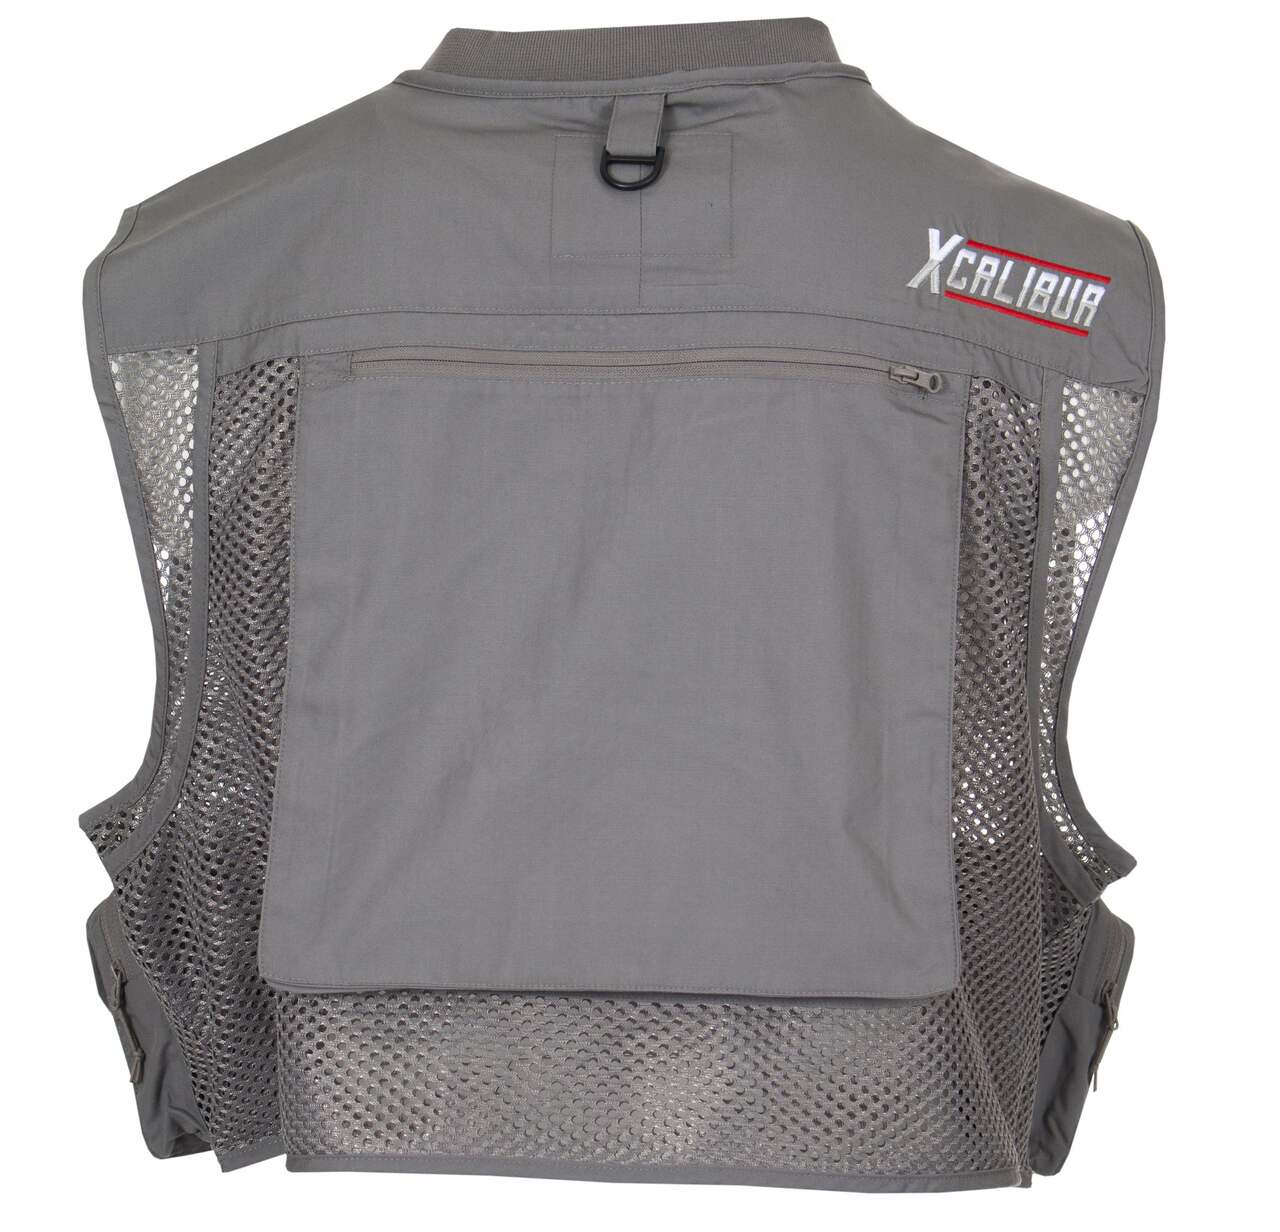 Xcalibur Adult Fishing Vest